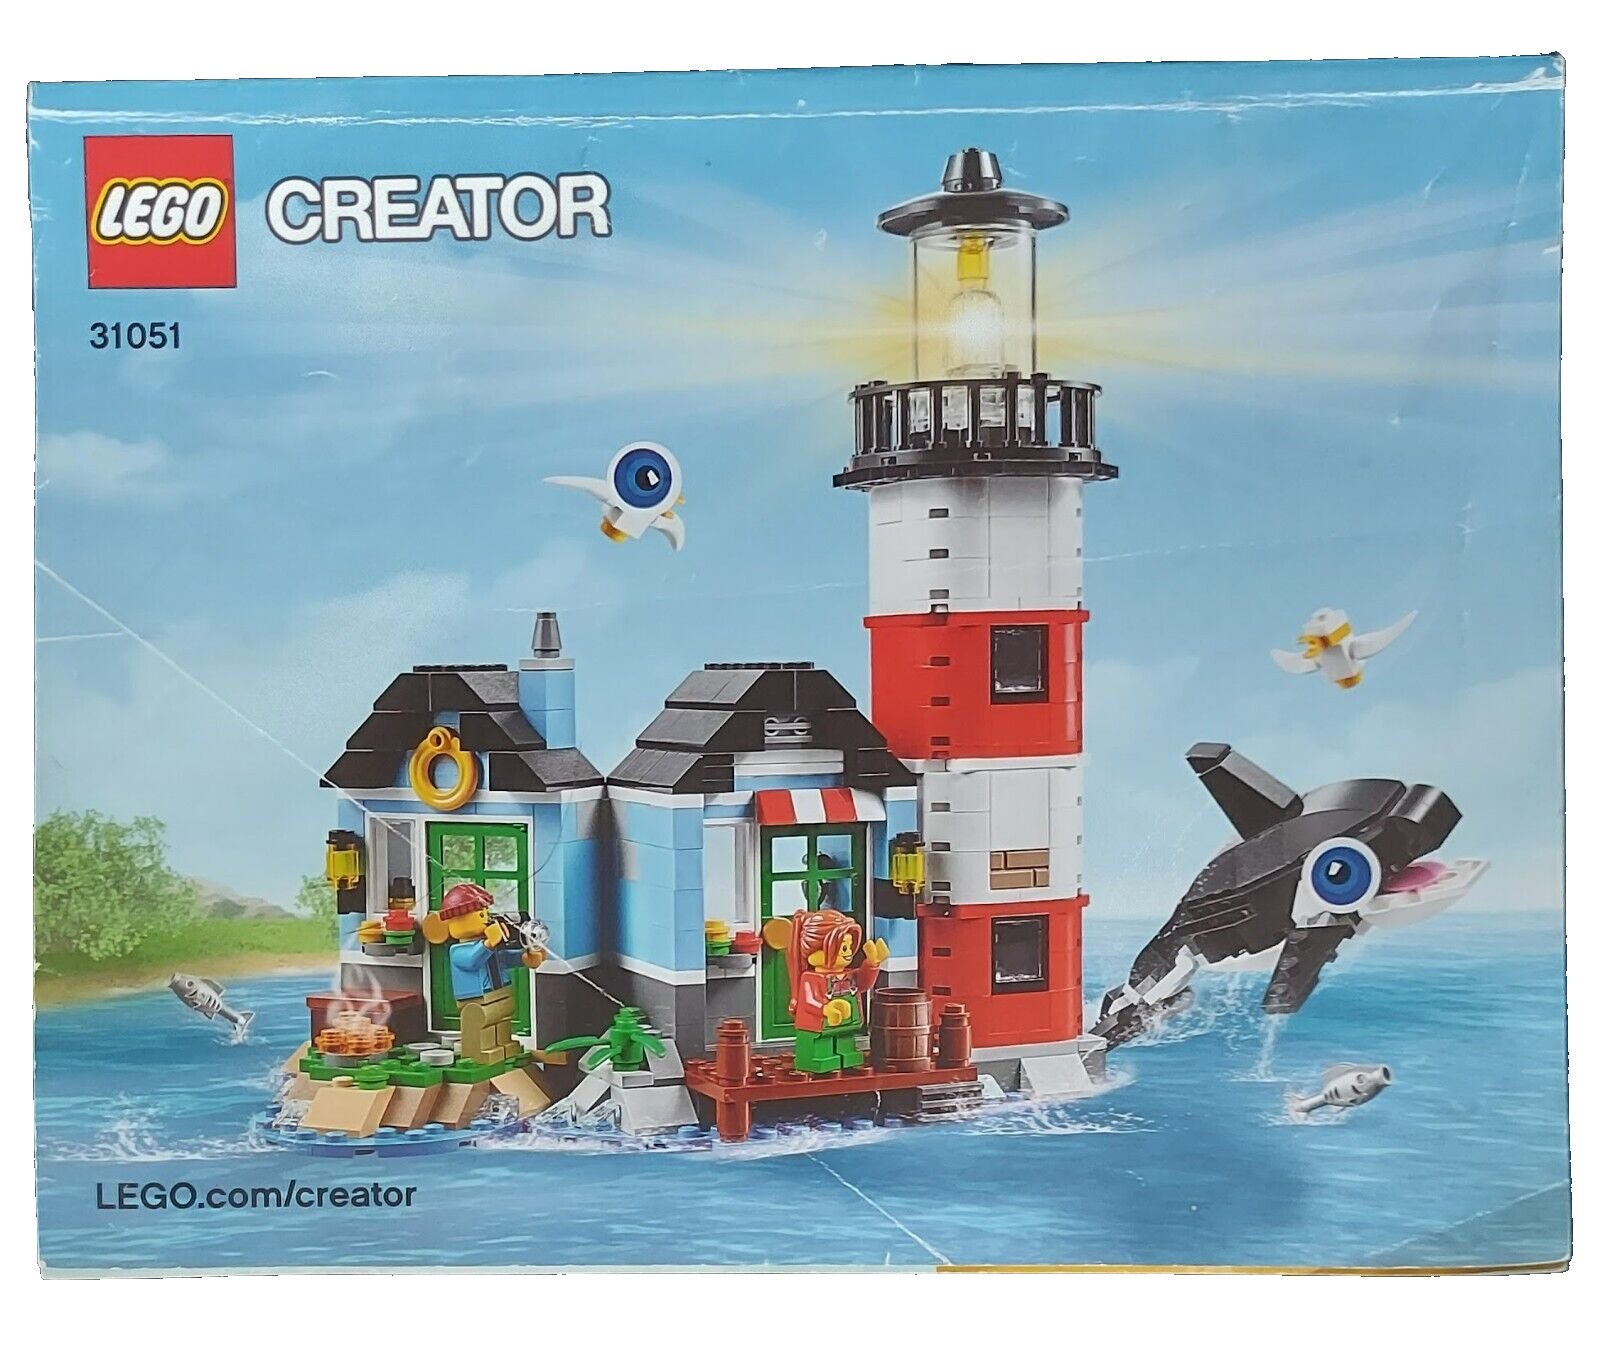 LEGO Creator 31051 Lighthouse Point 2016 Instruction Manual